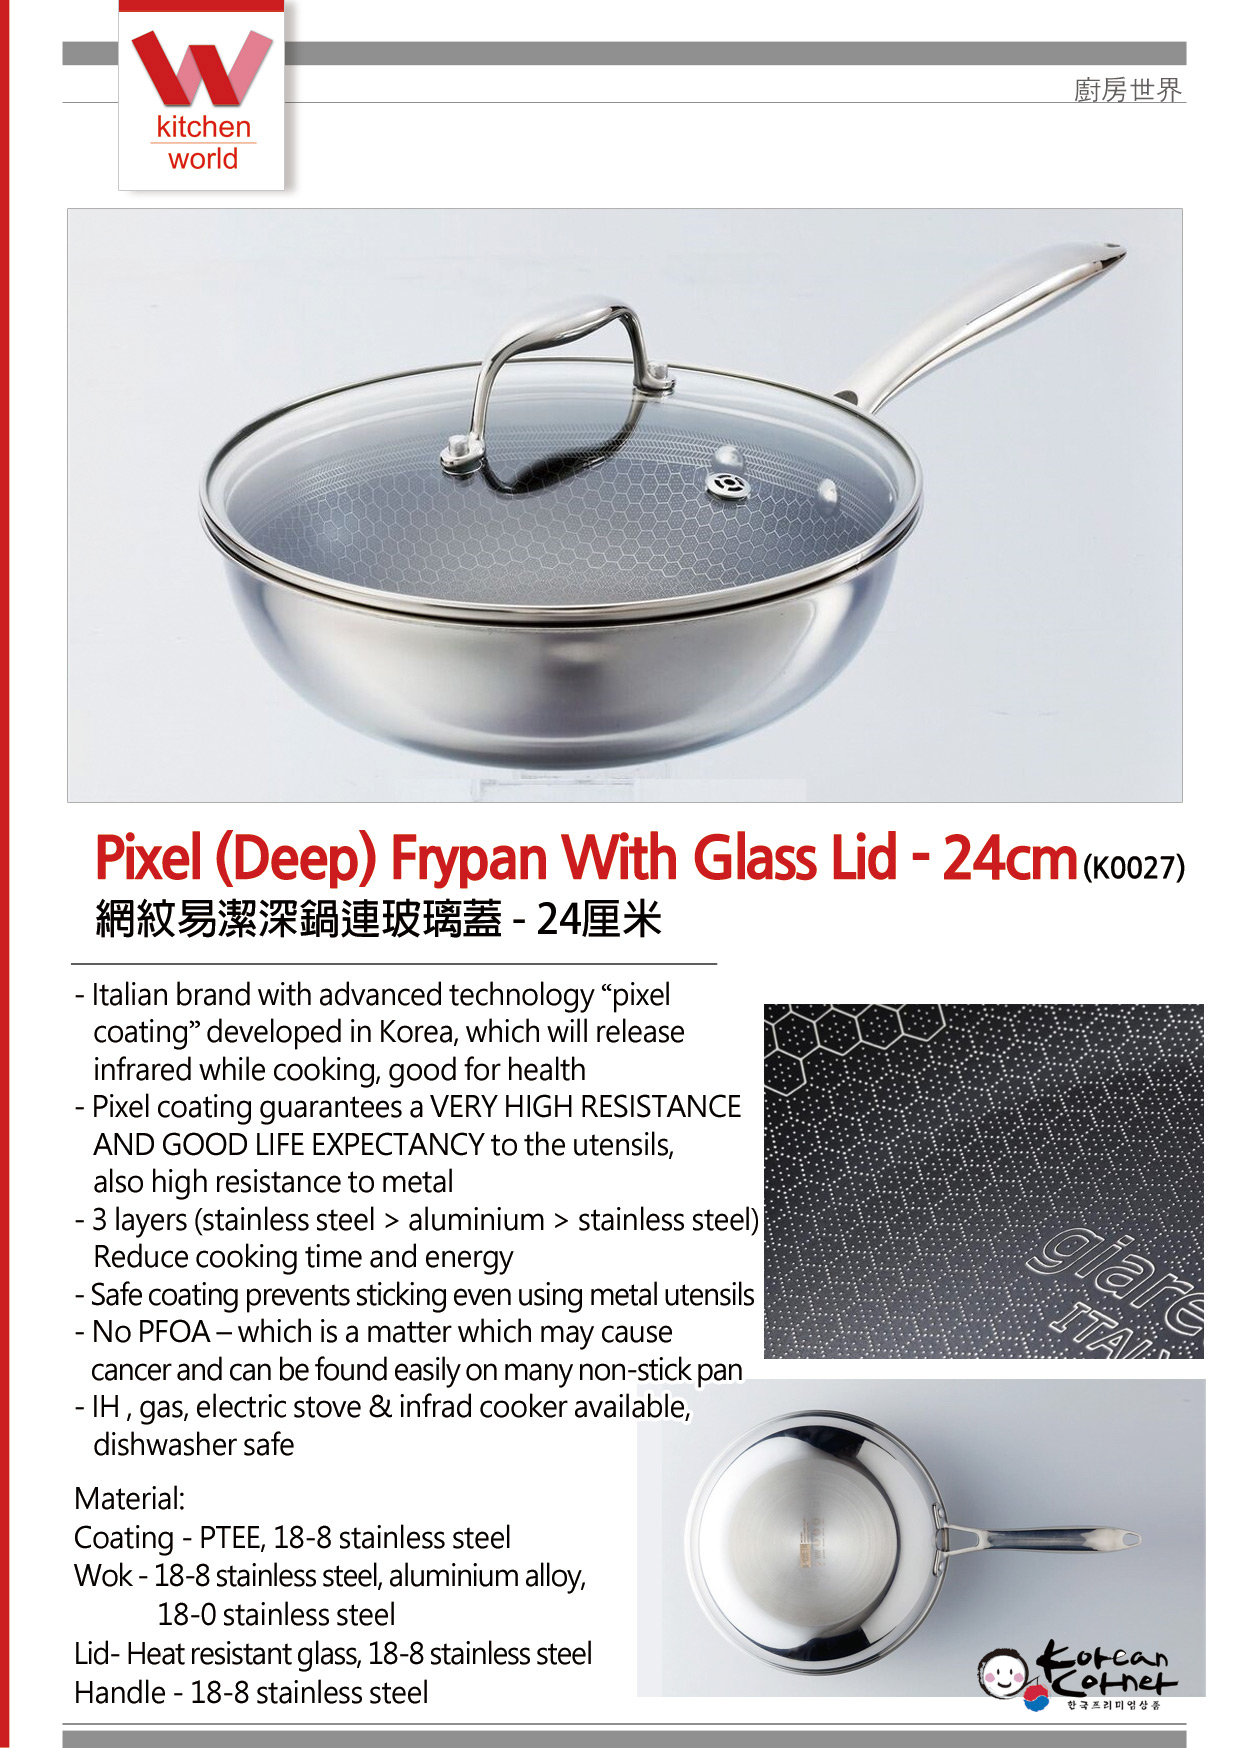 Pixel deep frypan with glass lid -24cm-kitchen world-korean corner